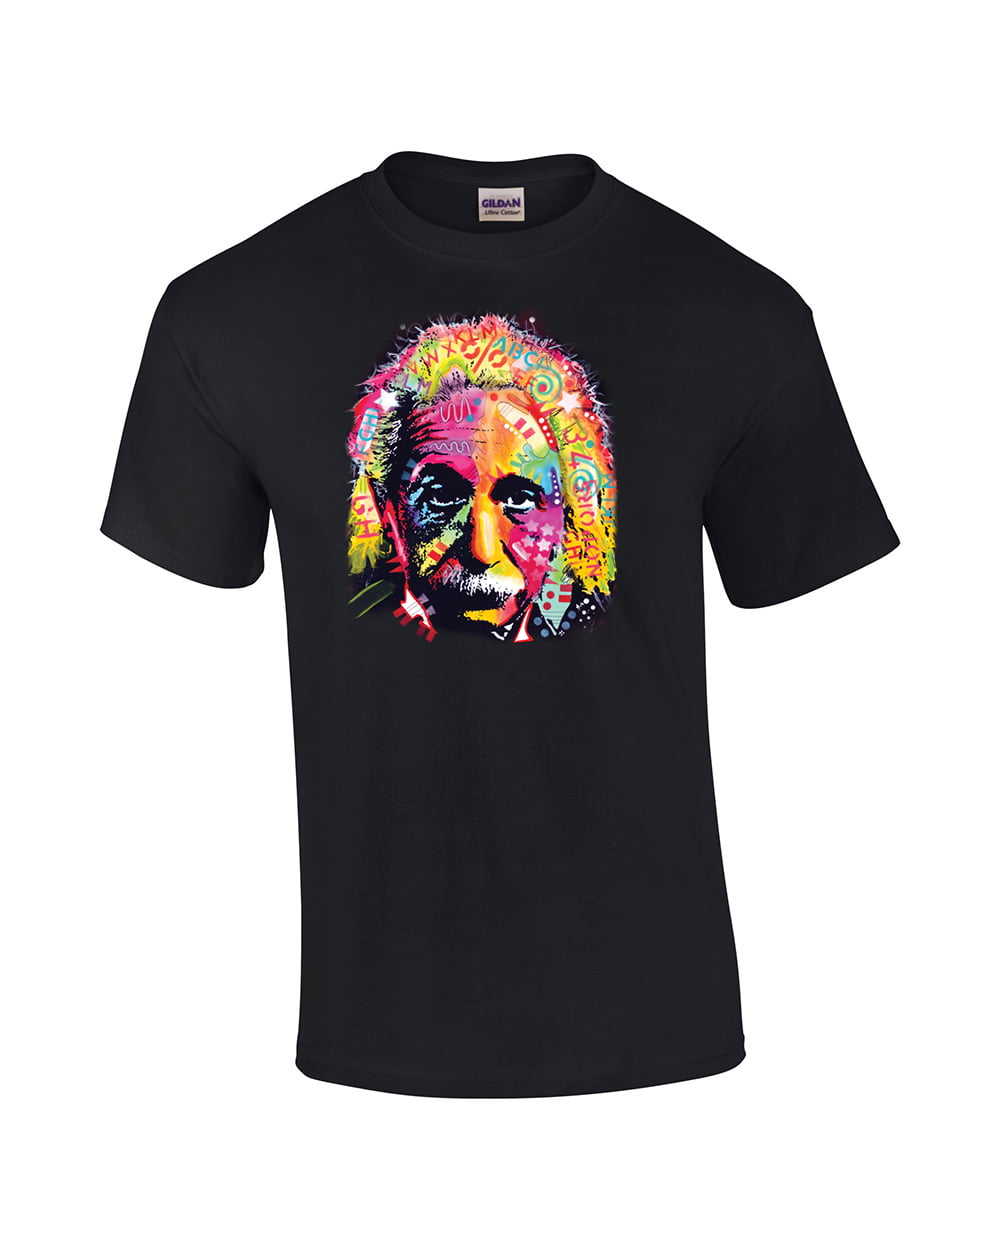 Einstein Neon Graphic T Shirt Academic College Artist Mens Small to 6XL Big Tall 